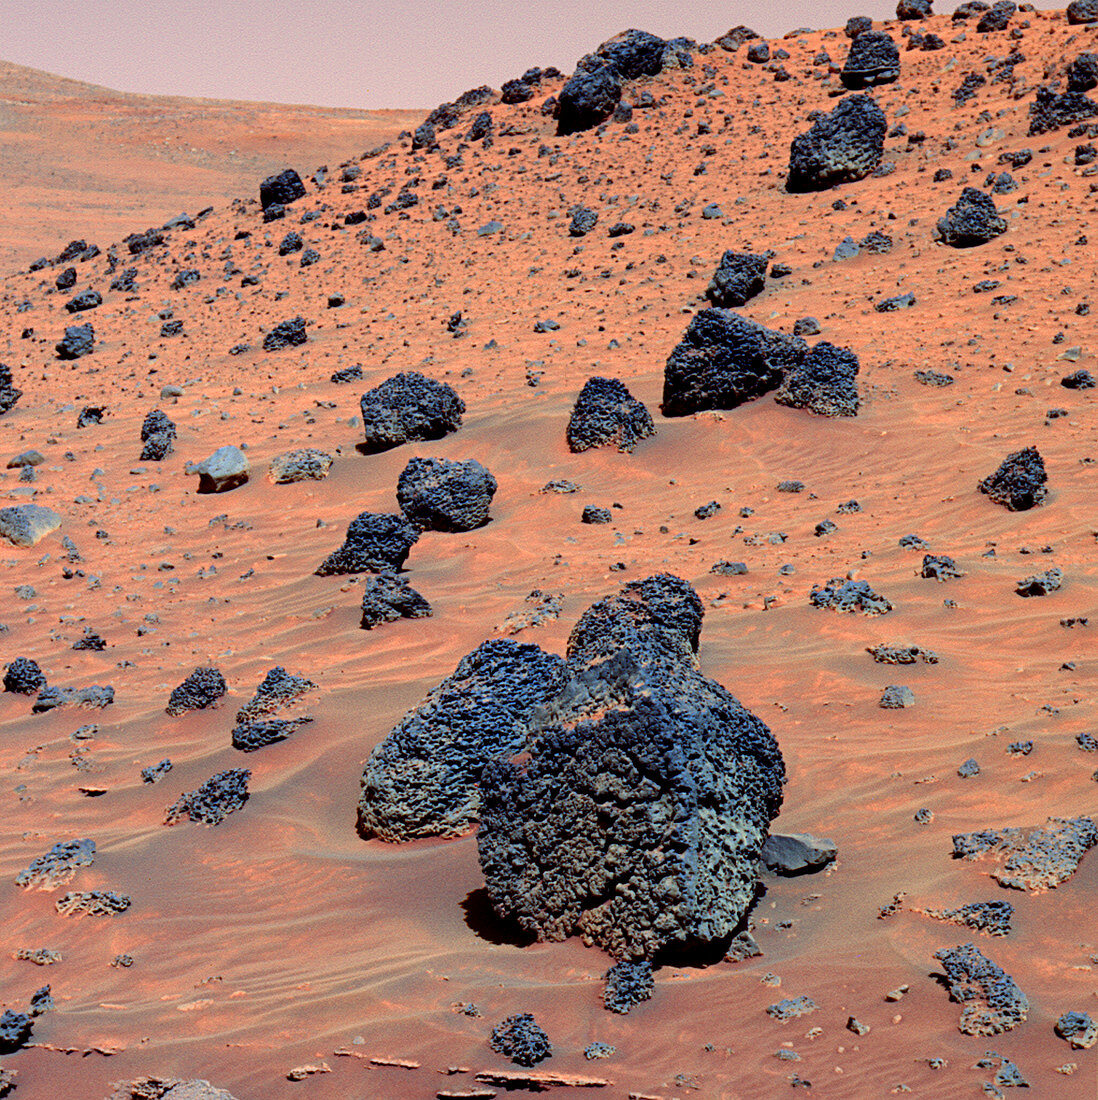 Martian rocks,false-colour image